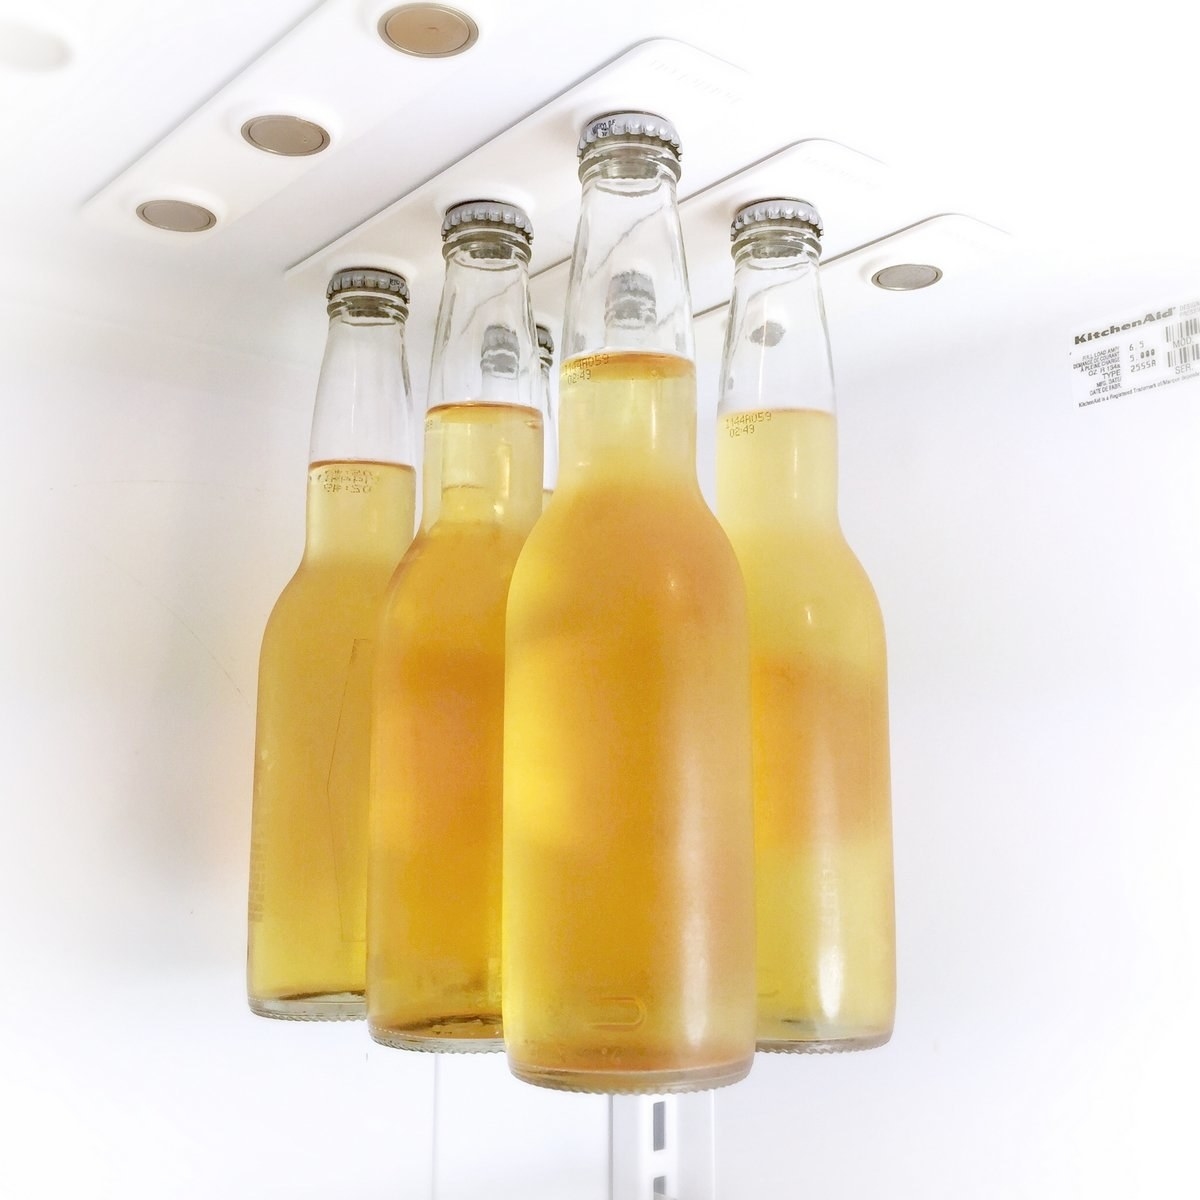 five beer bottles hanging from the bottle loft in a fridge 